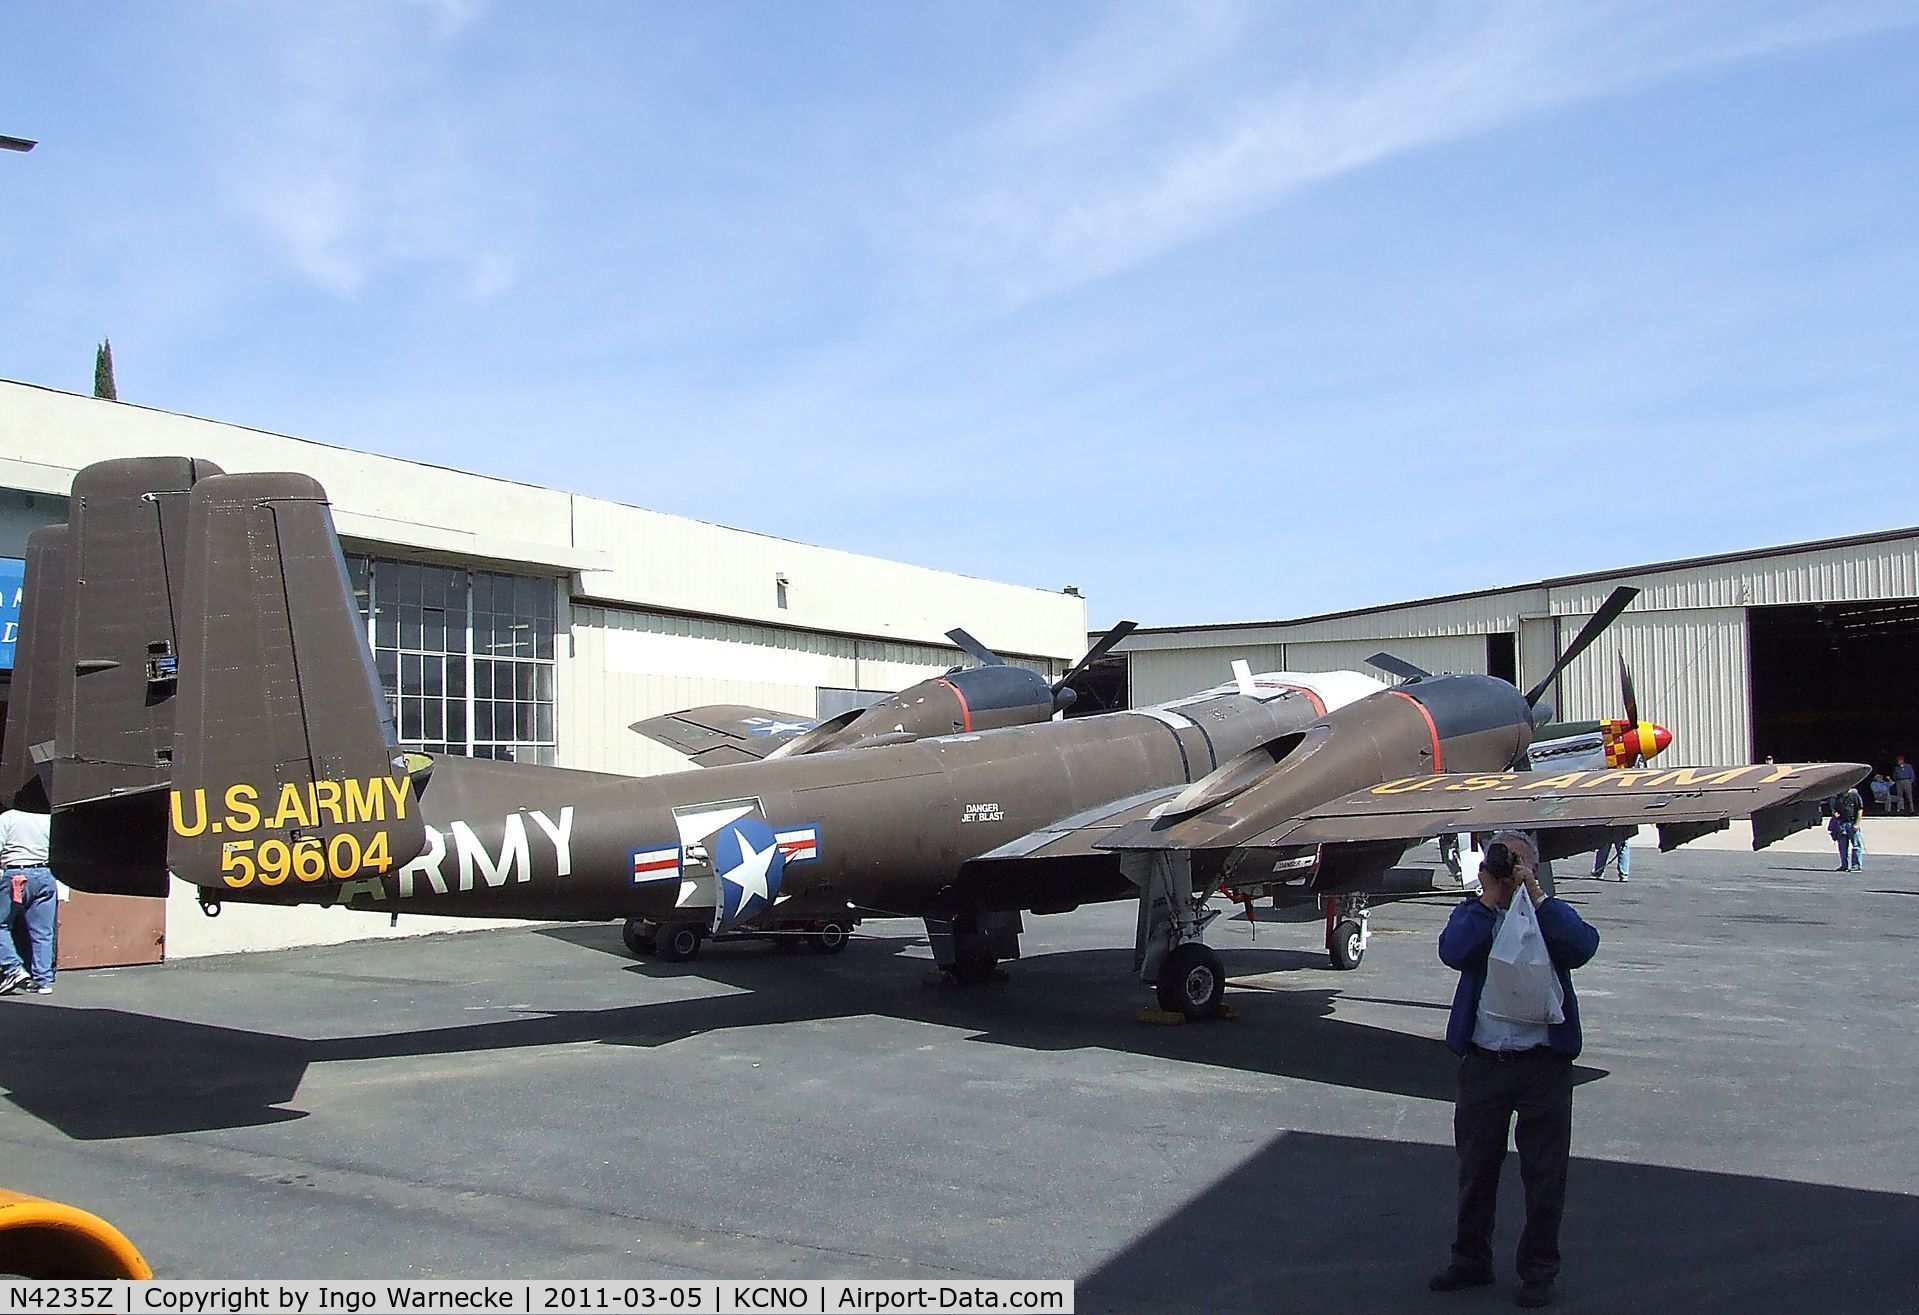 N4235Z, 1959 Grumman OV-1A Mohawk C/N Not found (2), Grumman OV-1A Mohawk at the Planes of Fame Air Museum, Chino CA